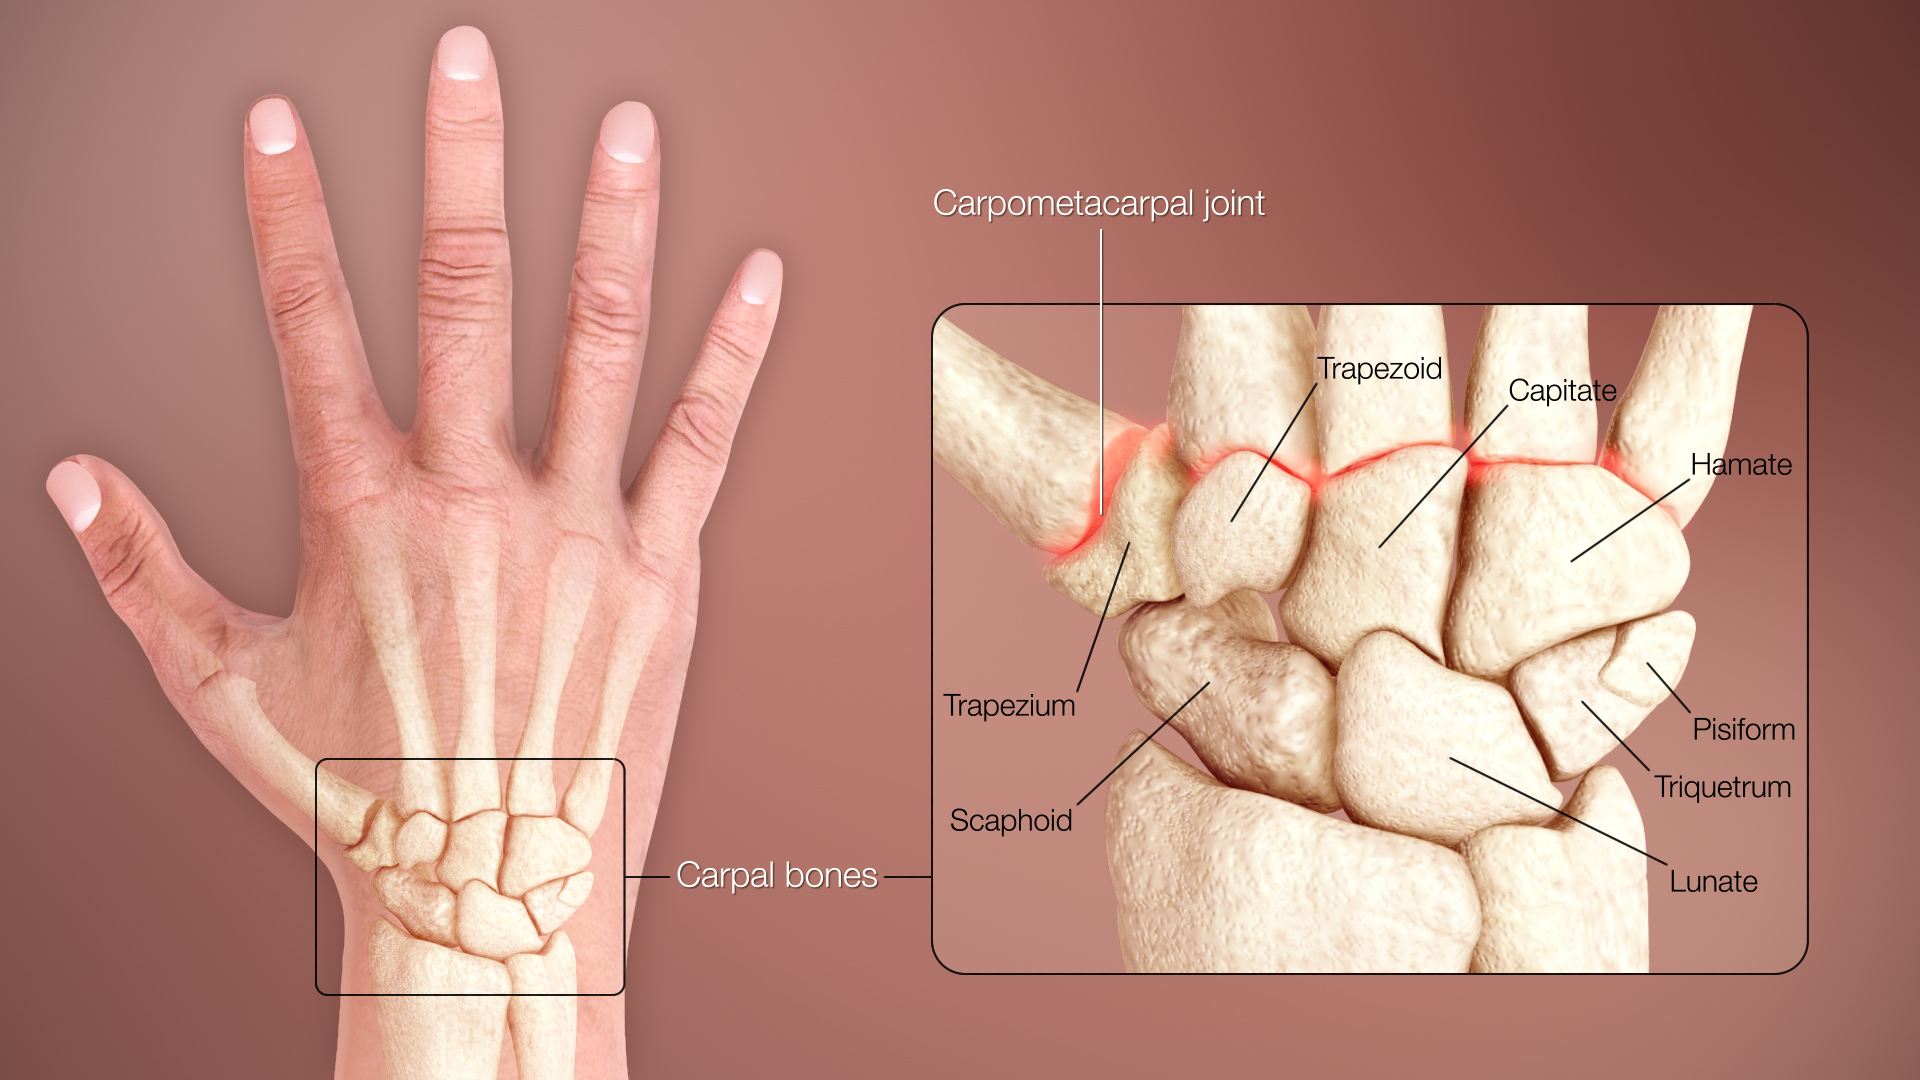 3D Medical illustration of the wrist bones of human body